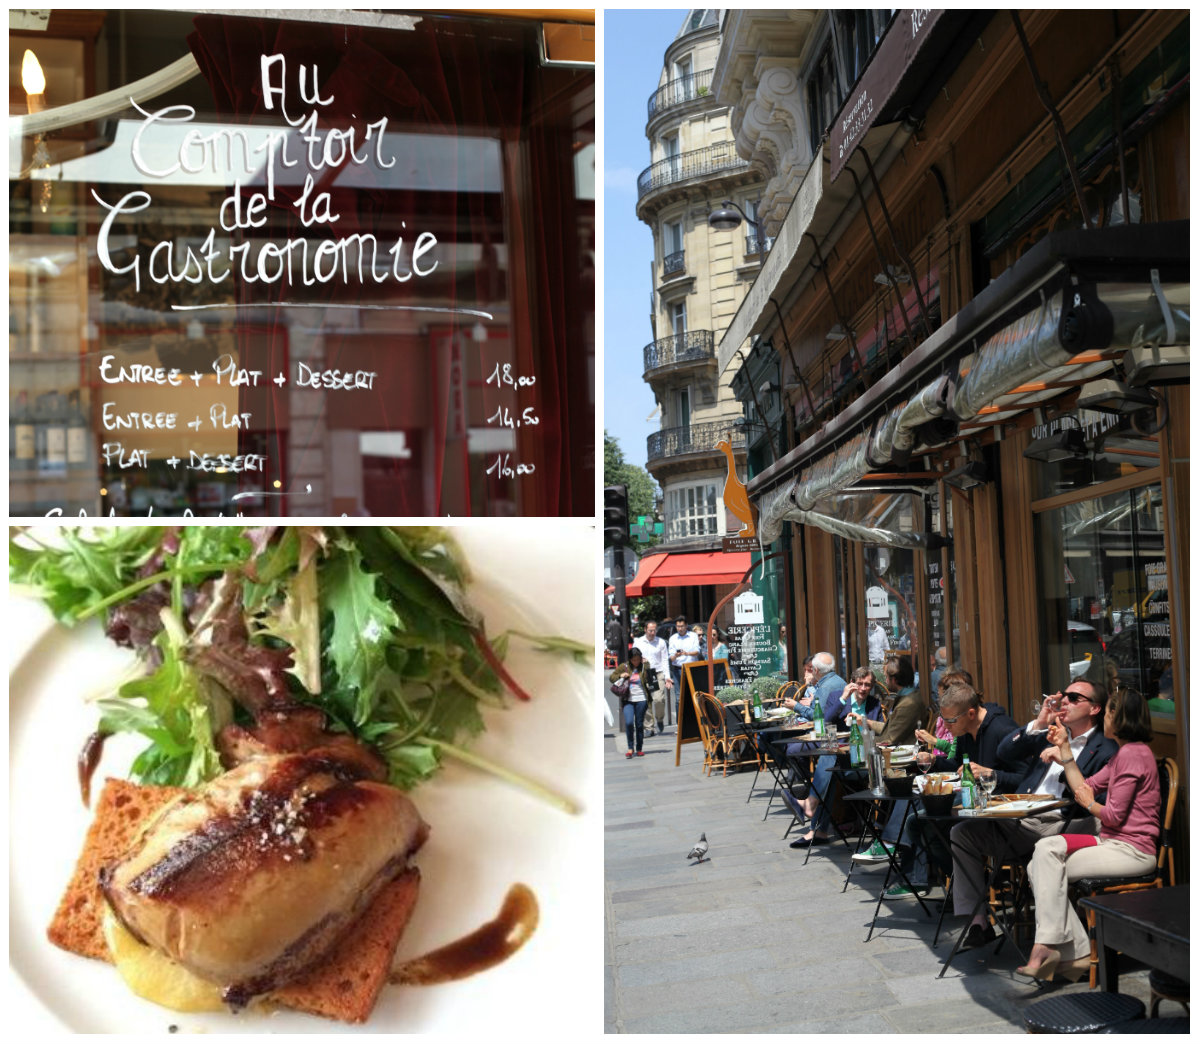 Le comptoir de la gastronomie, lunchadres in Parijs